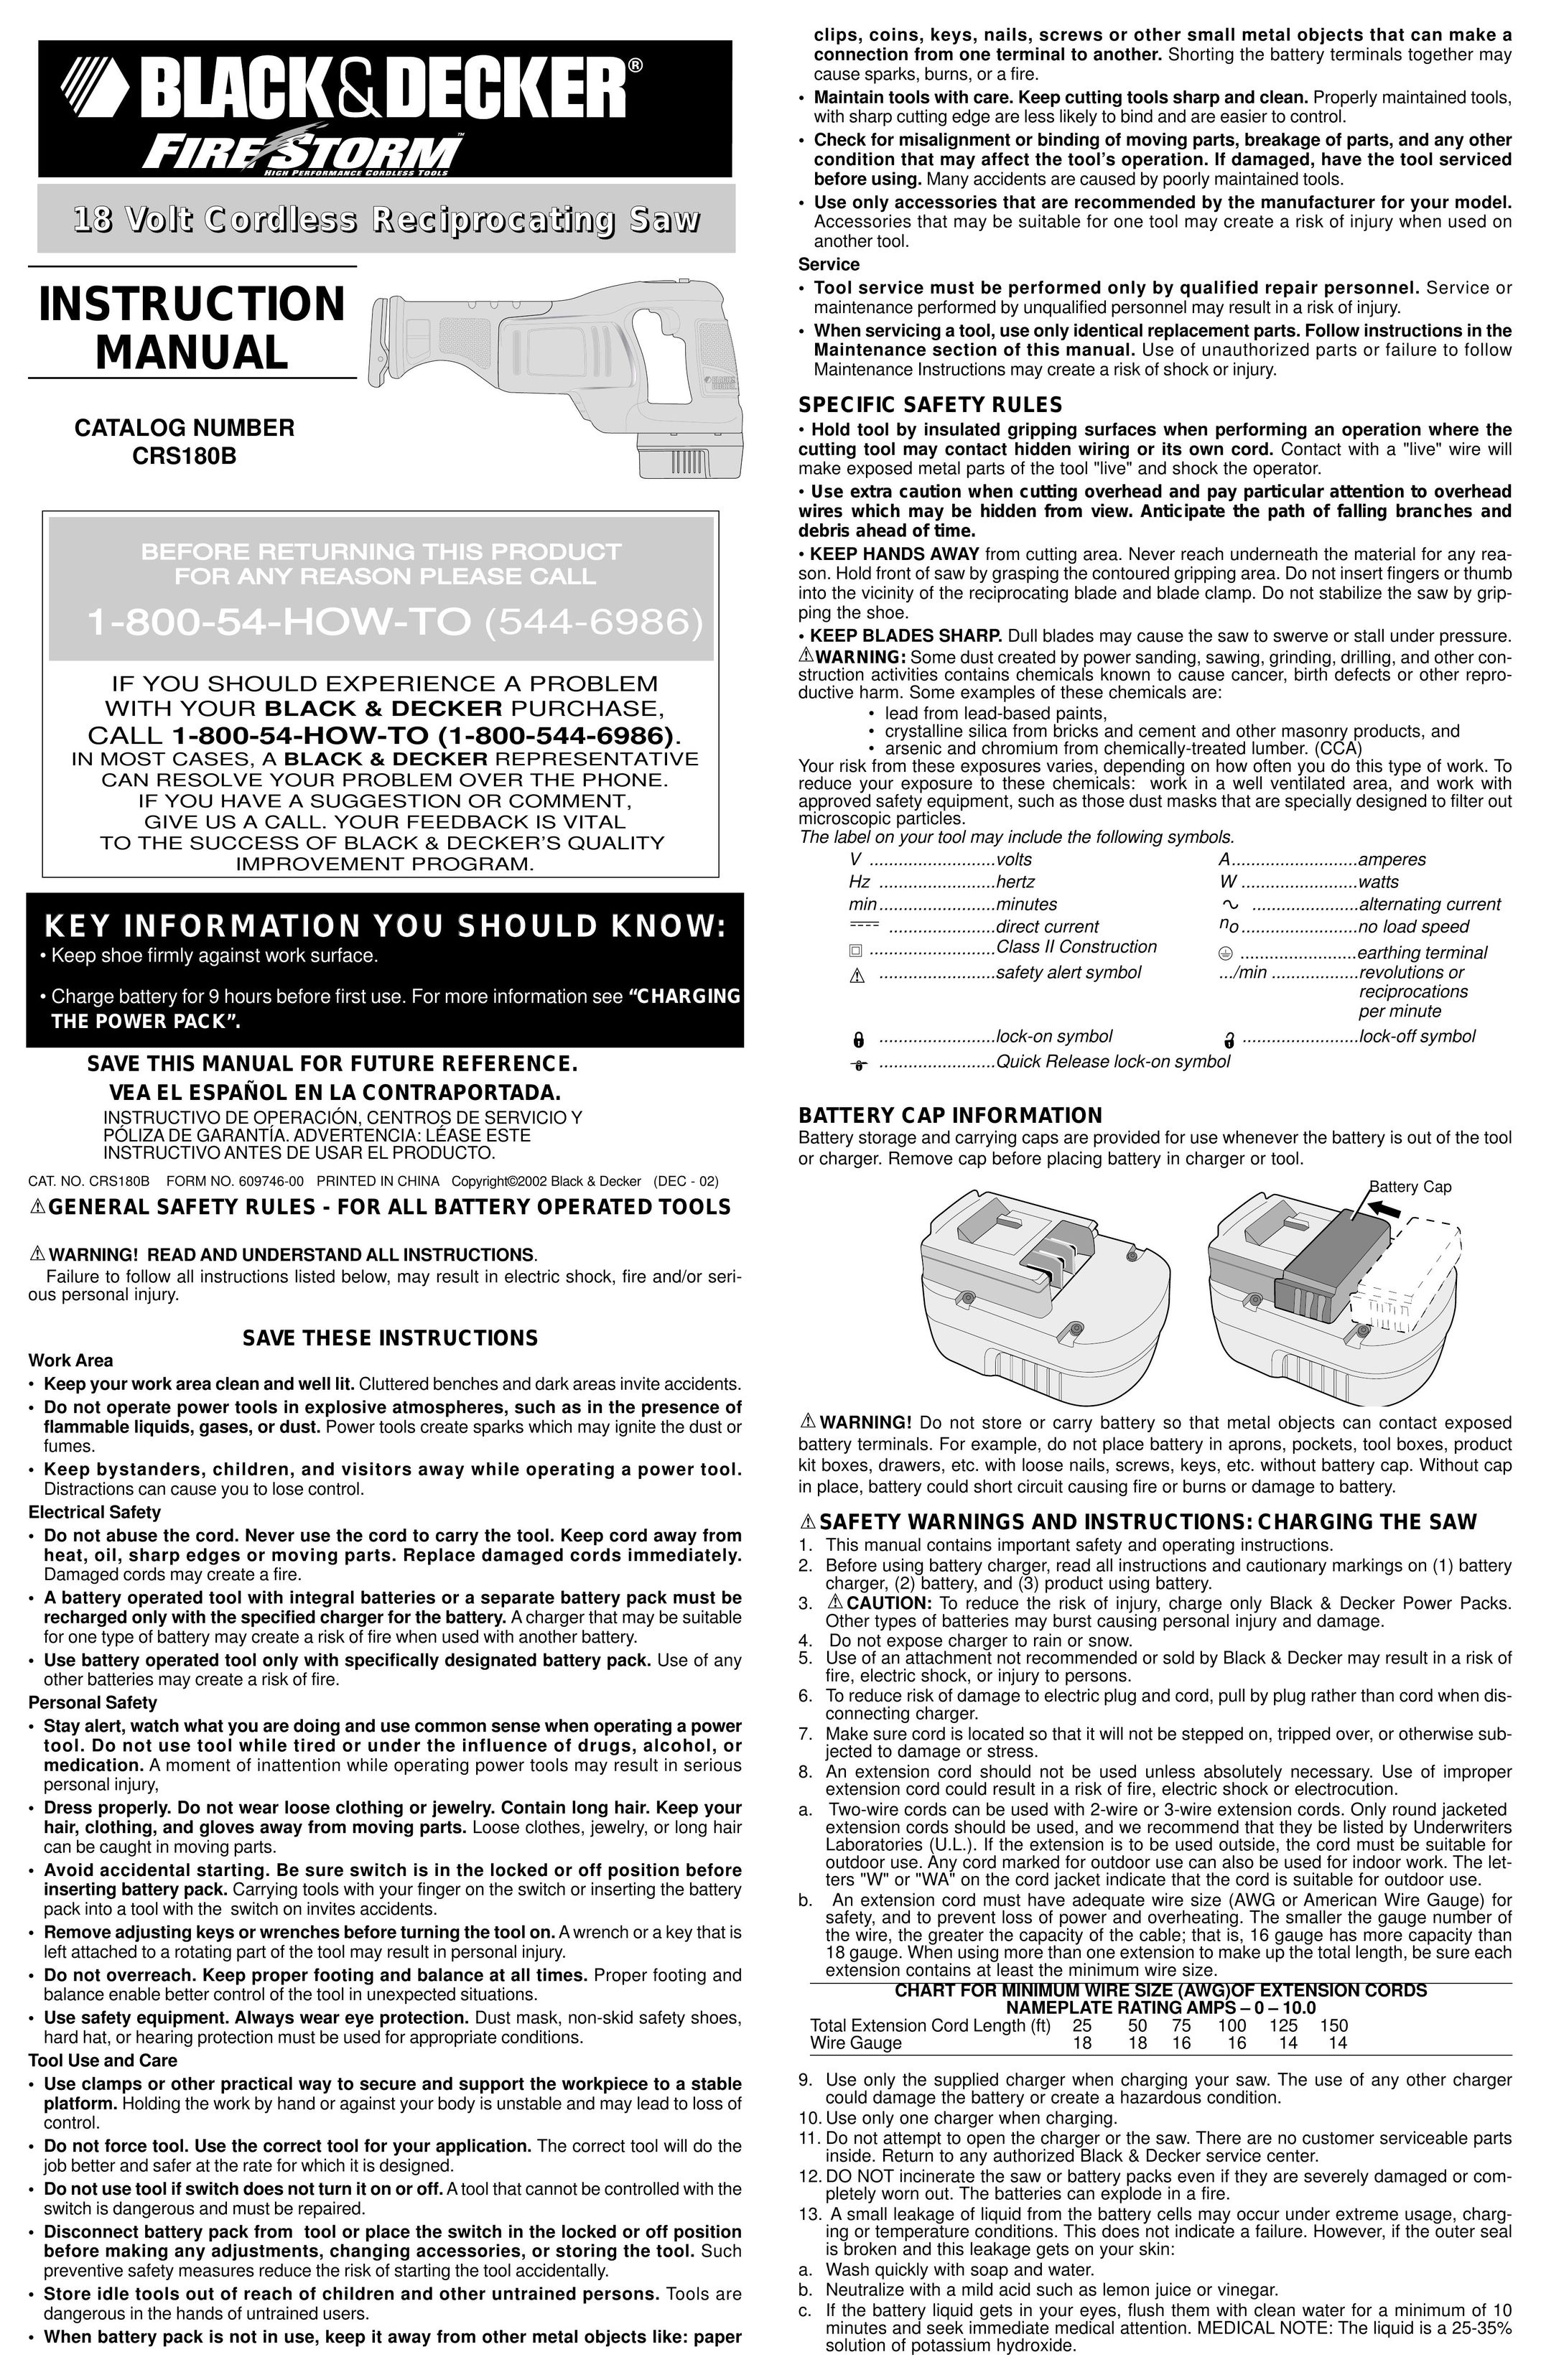 Black & Decker CRS180B Cordless Saw User Manual